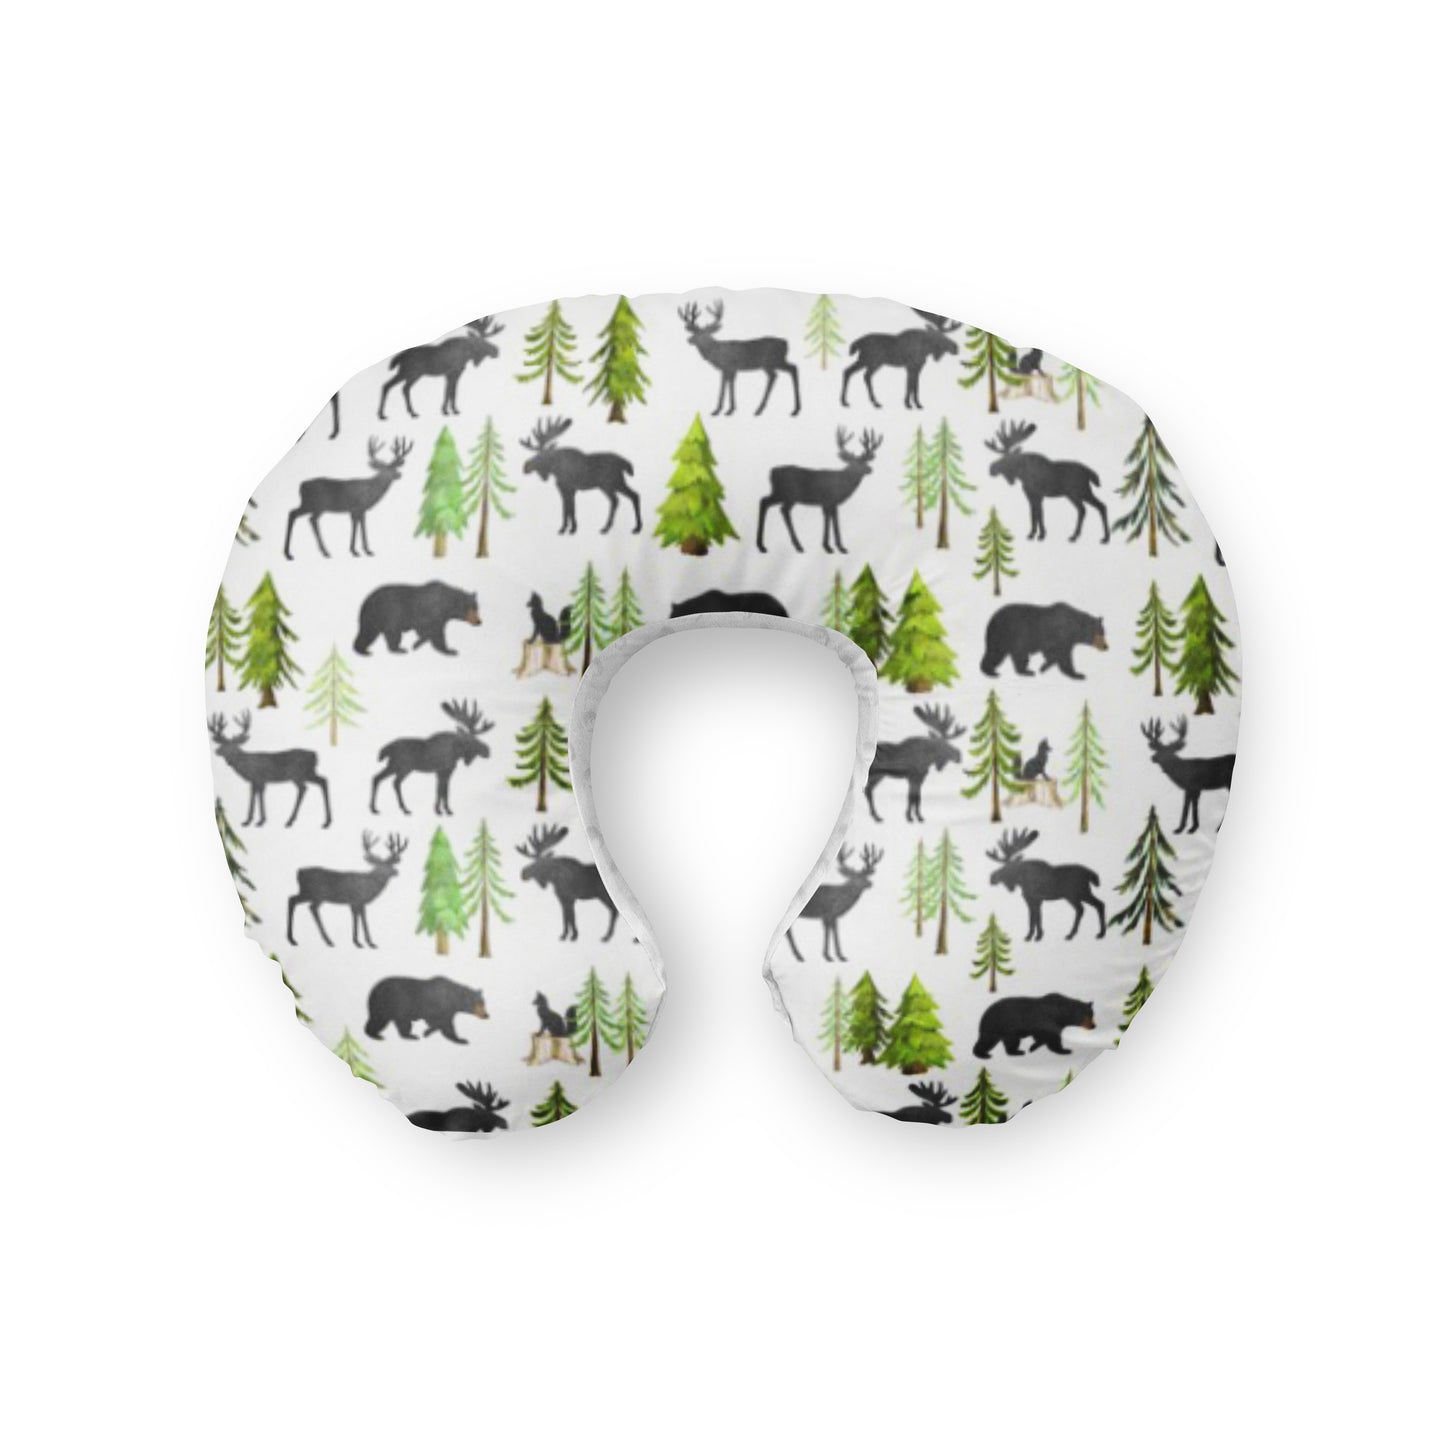 Nursing pillow cover. Moose Bear Fox Pine tree Woodland white black green baby nursery